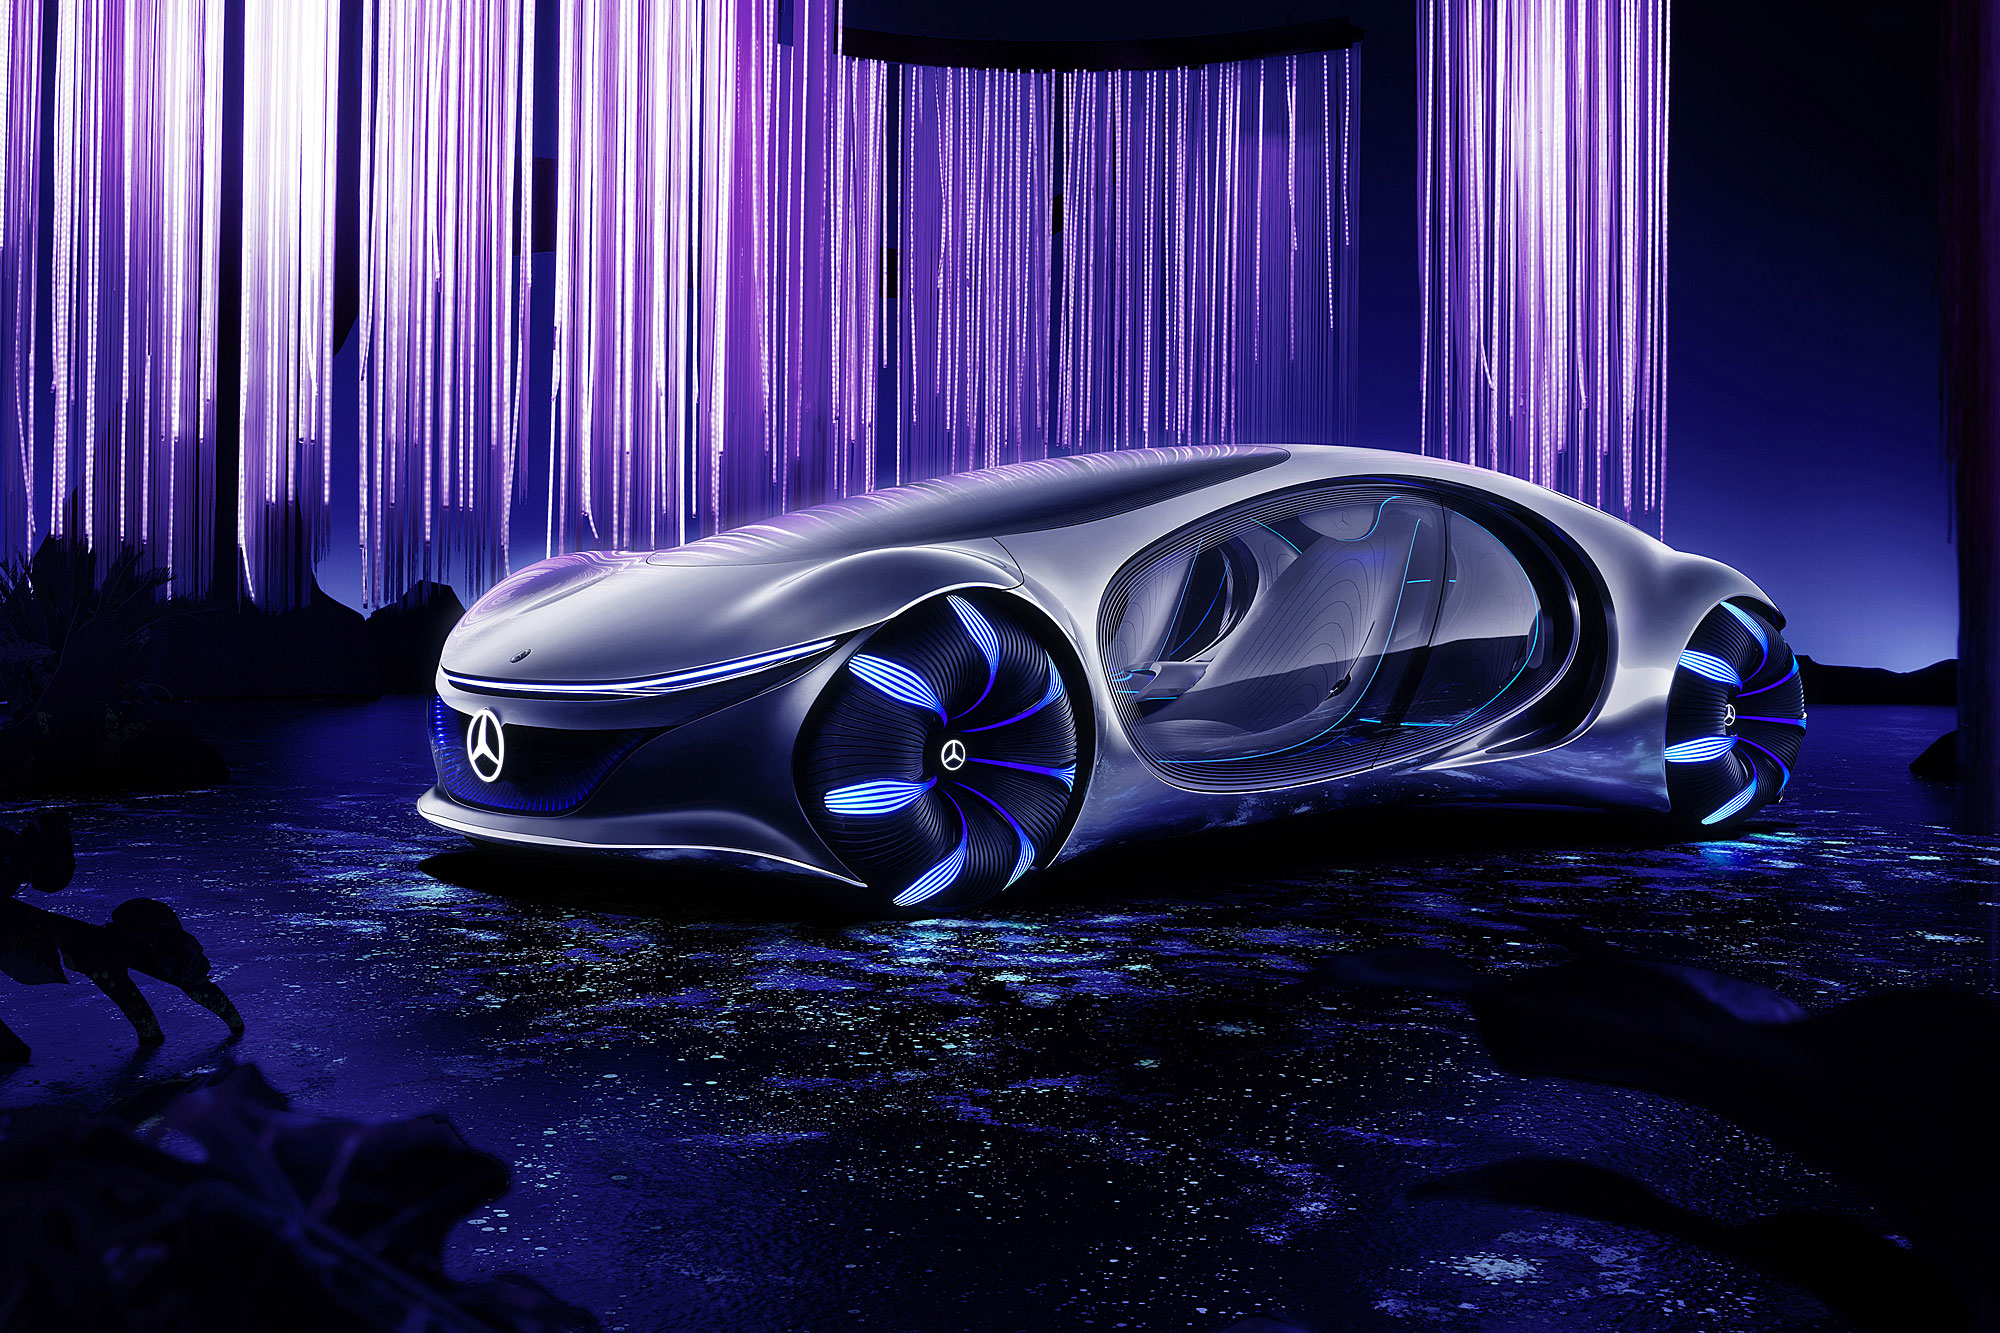 Vision AVTR 為 Mercedes-Benz 與 James Cameron 合作推出的概念作品。